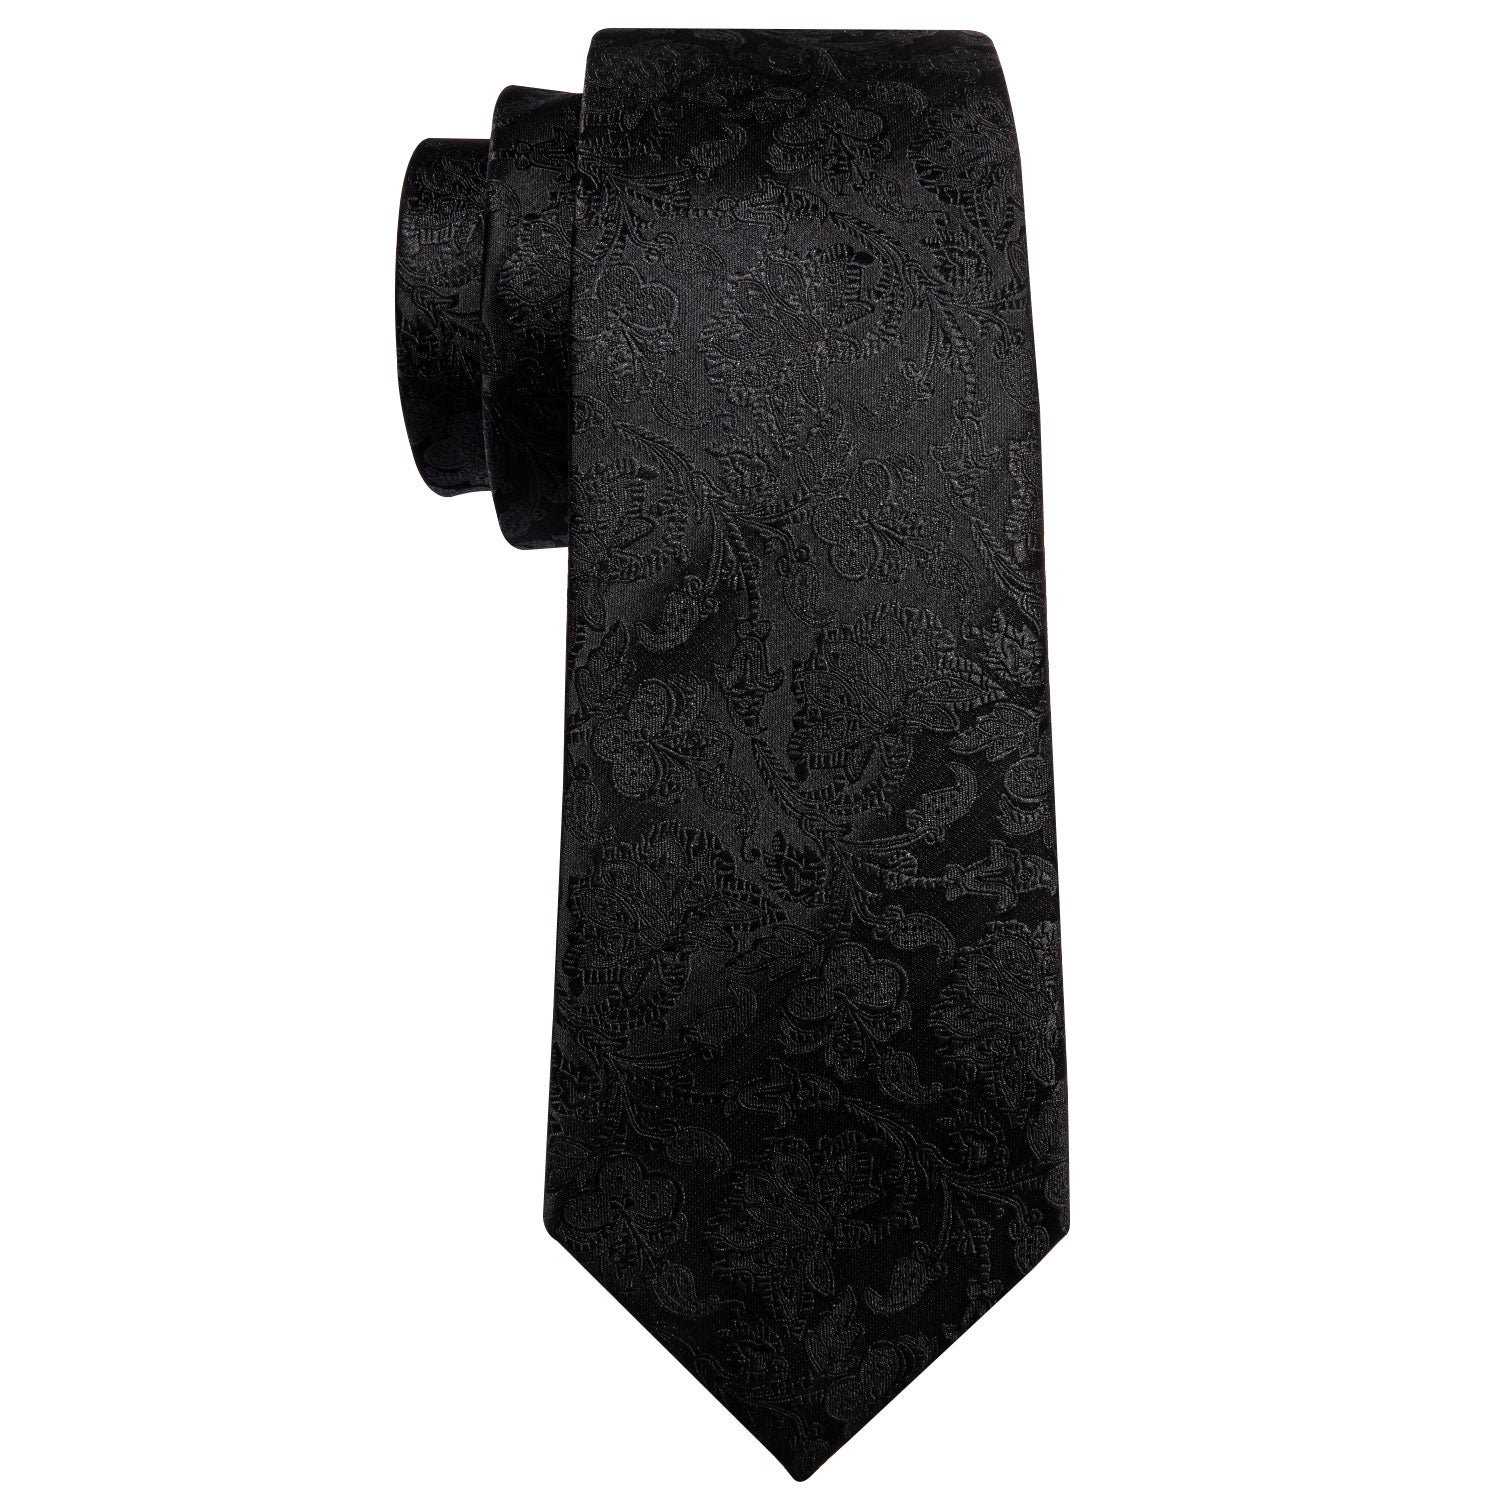 Barry Wang Necktie Black Floral 63 Inches Tie Hanky Cufflinks Set